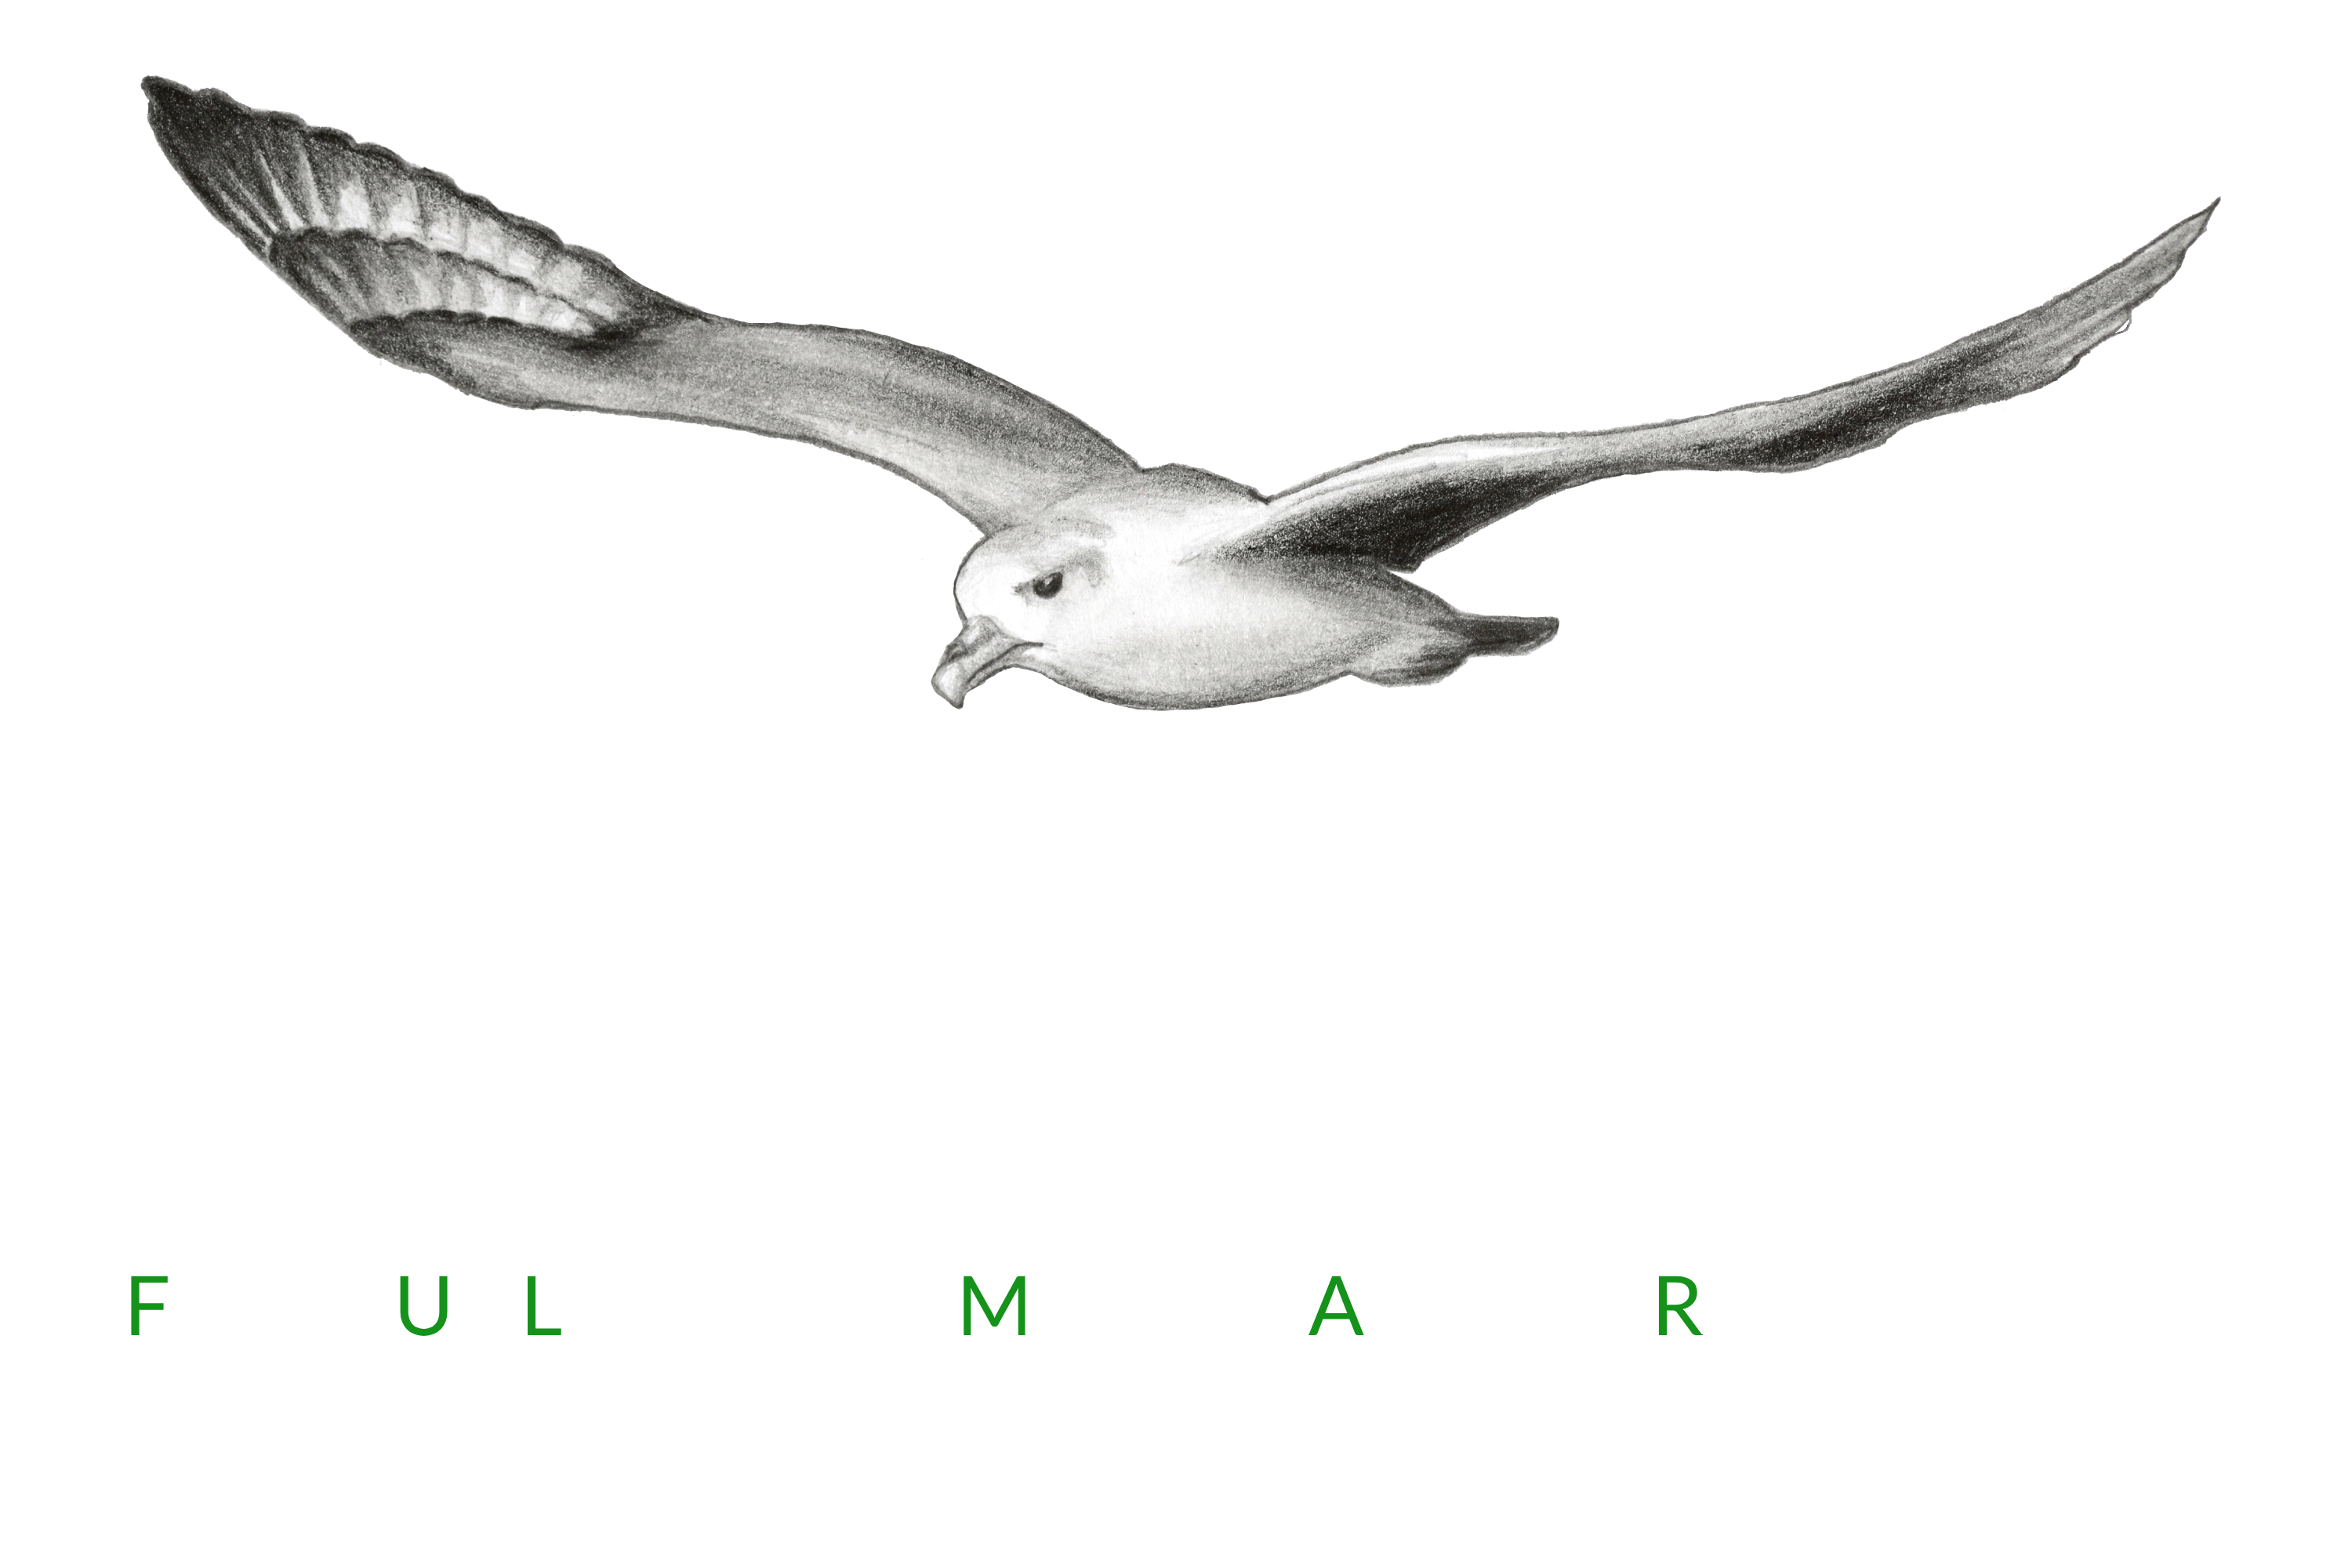 _images/FULMAR_logo_title_dark_mode.png